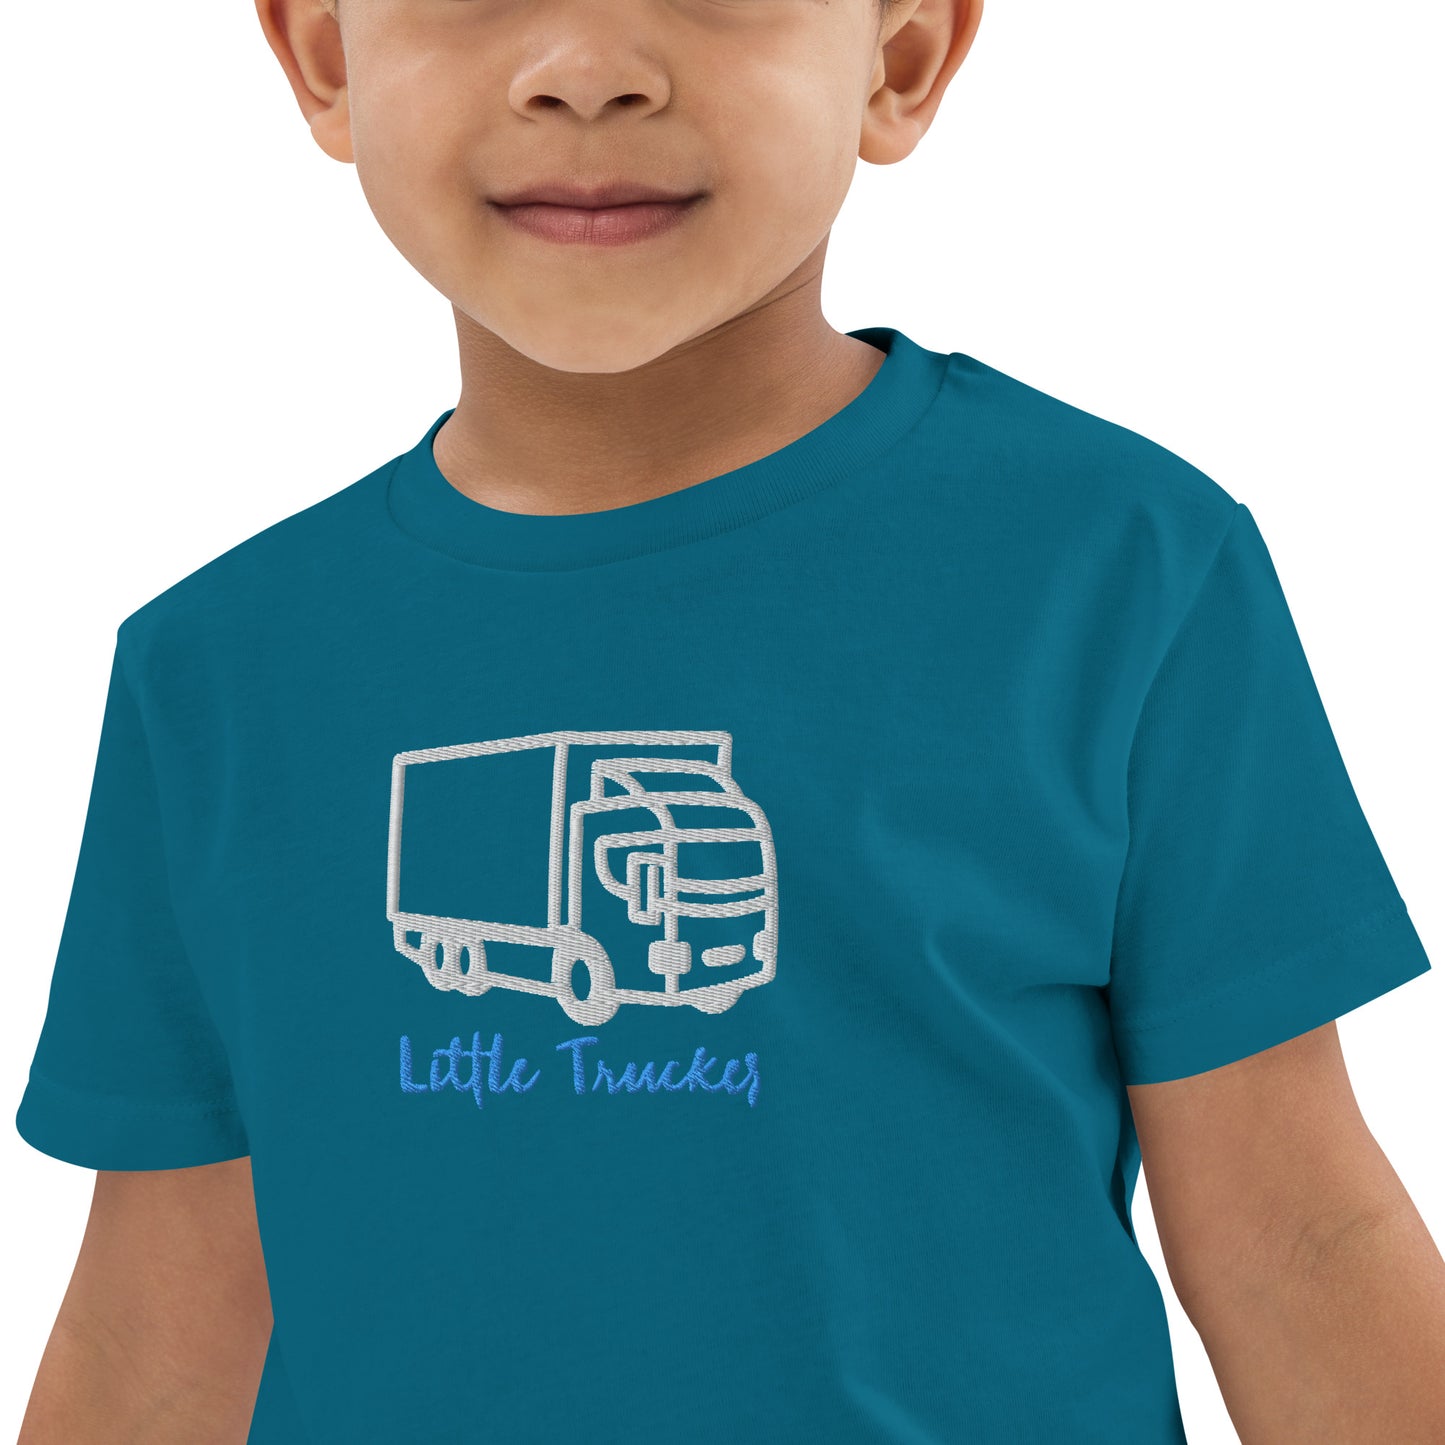 "Little trucker" children's t-shirt (ecological)